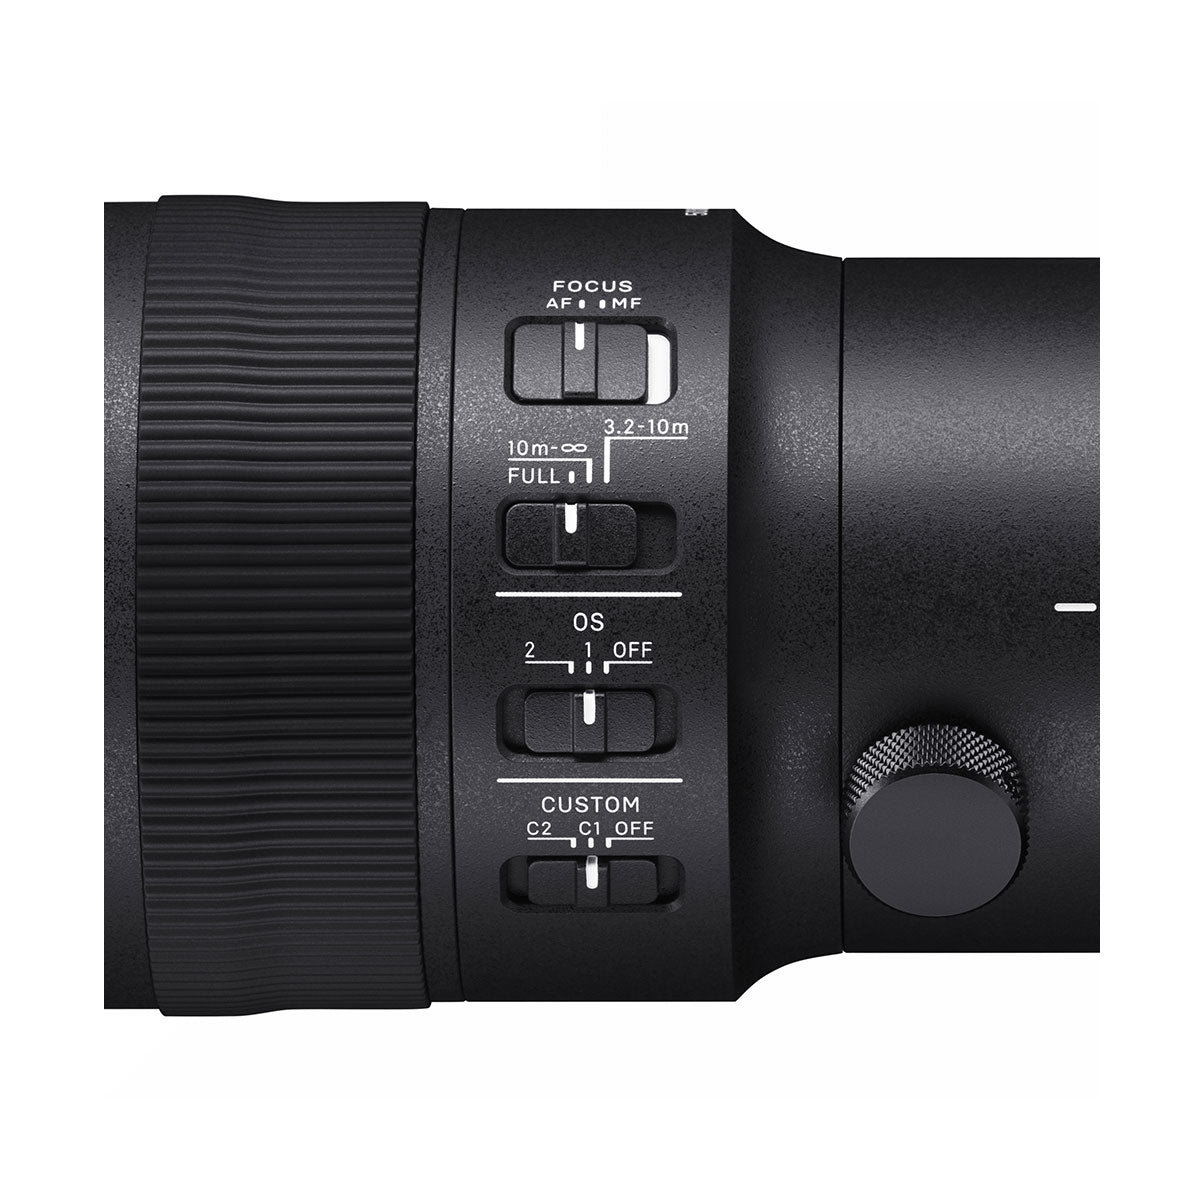 Sigma 500mm f/5.6 DG DN OS Sports Lens for Leica / Panasonic L-Mount